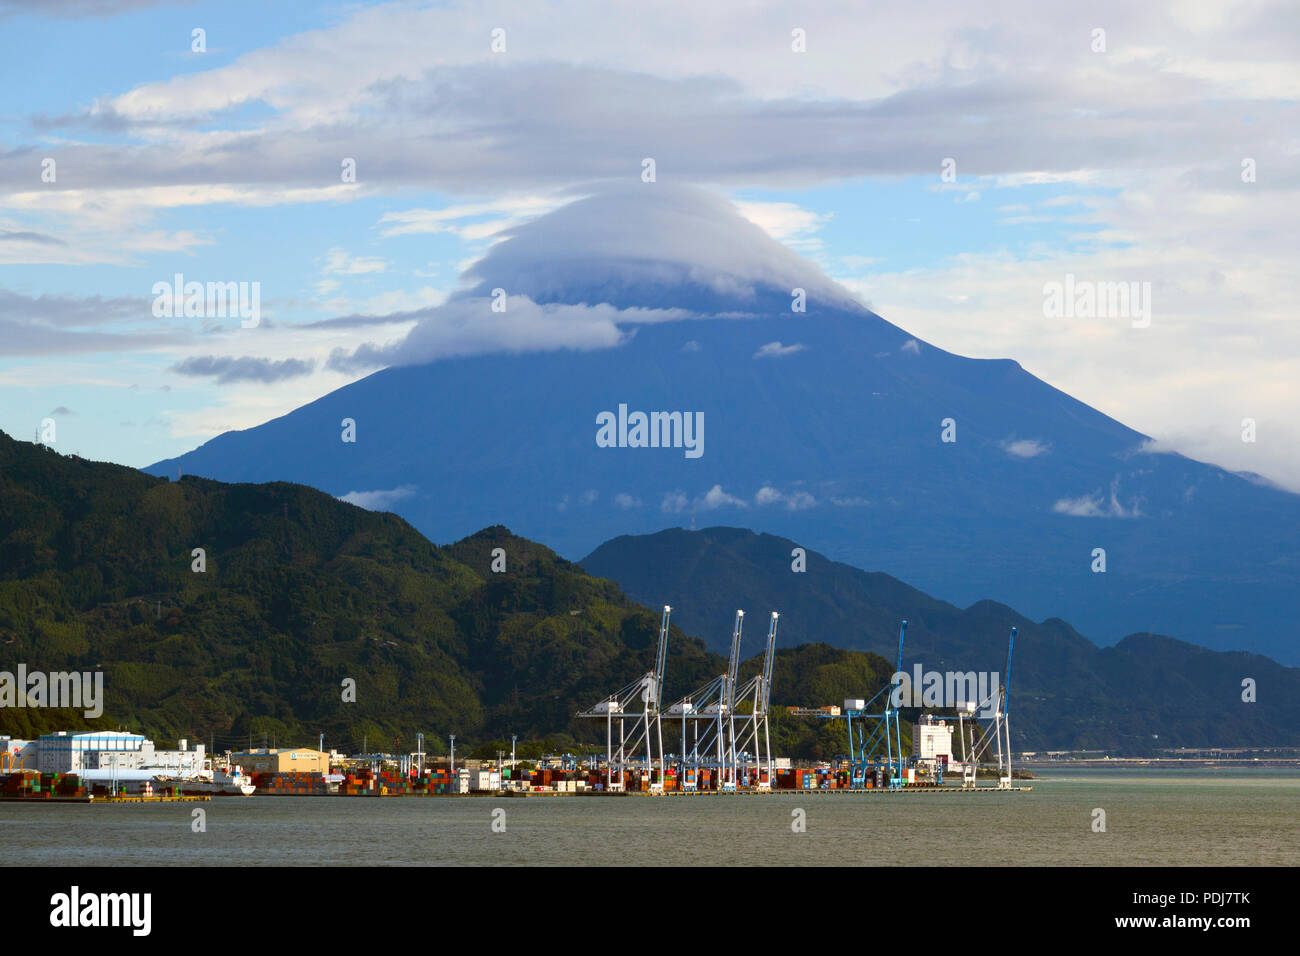 Mt Fuji Hakone National Park Volcanic Japan Asia Stock Photo